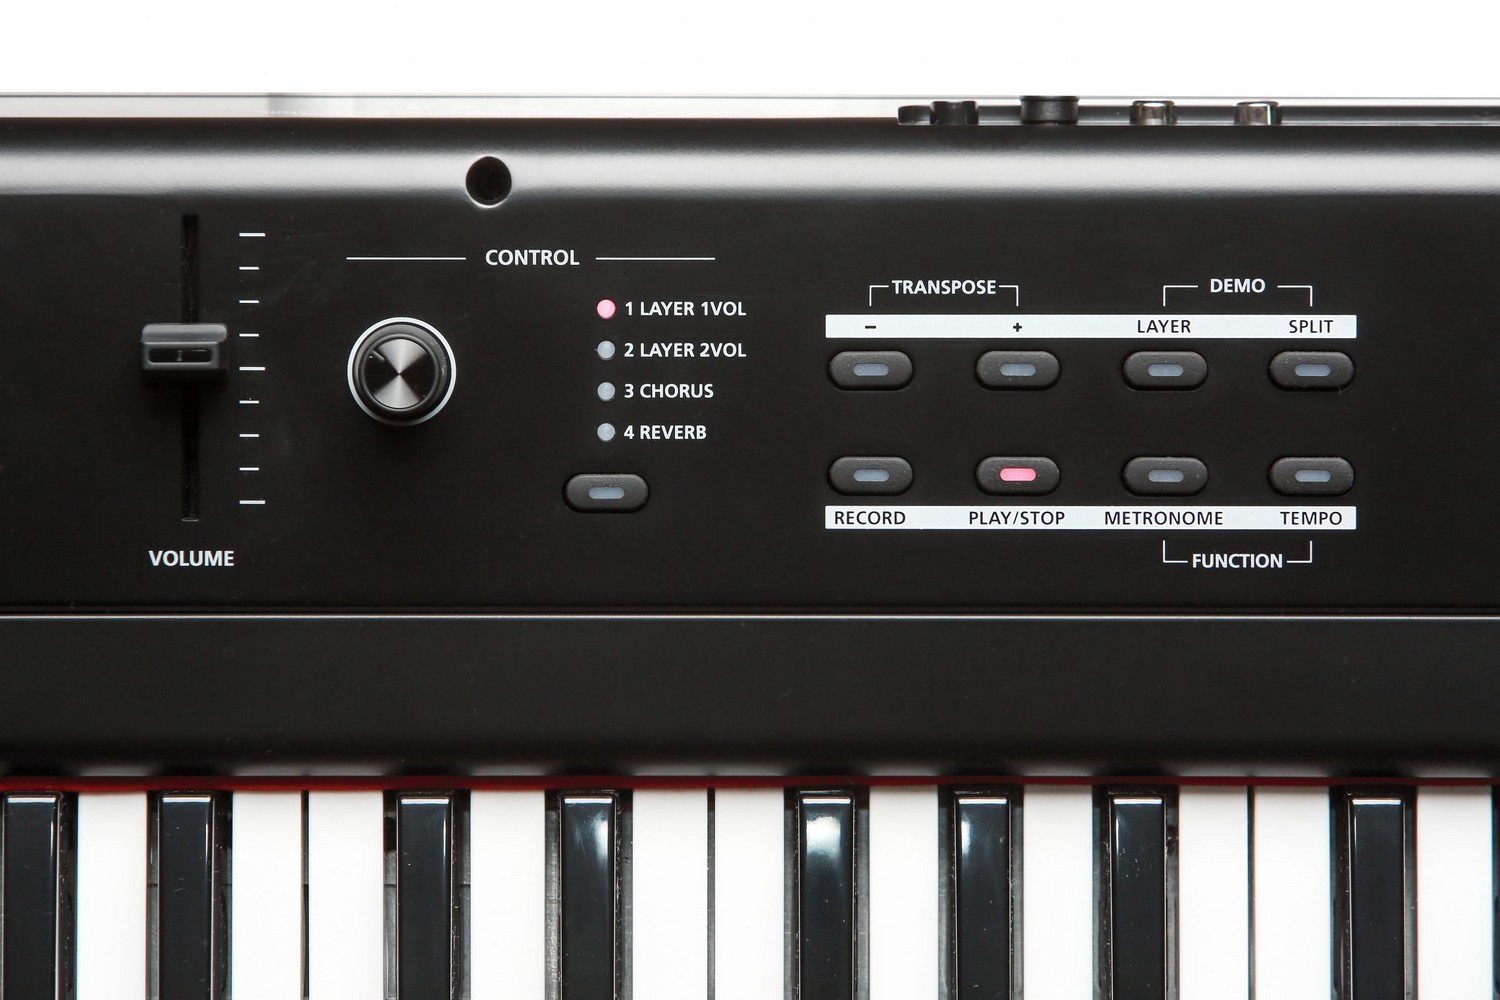 Цифровое пианино Kurzweil KA50 LB